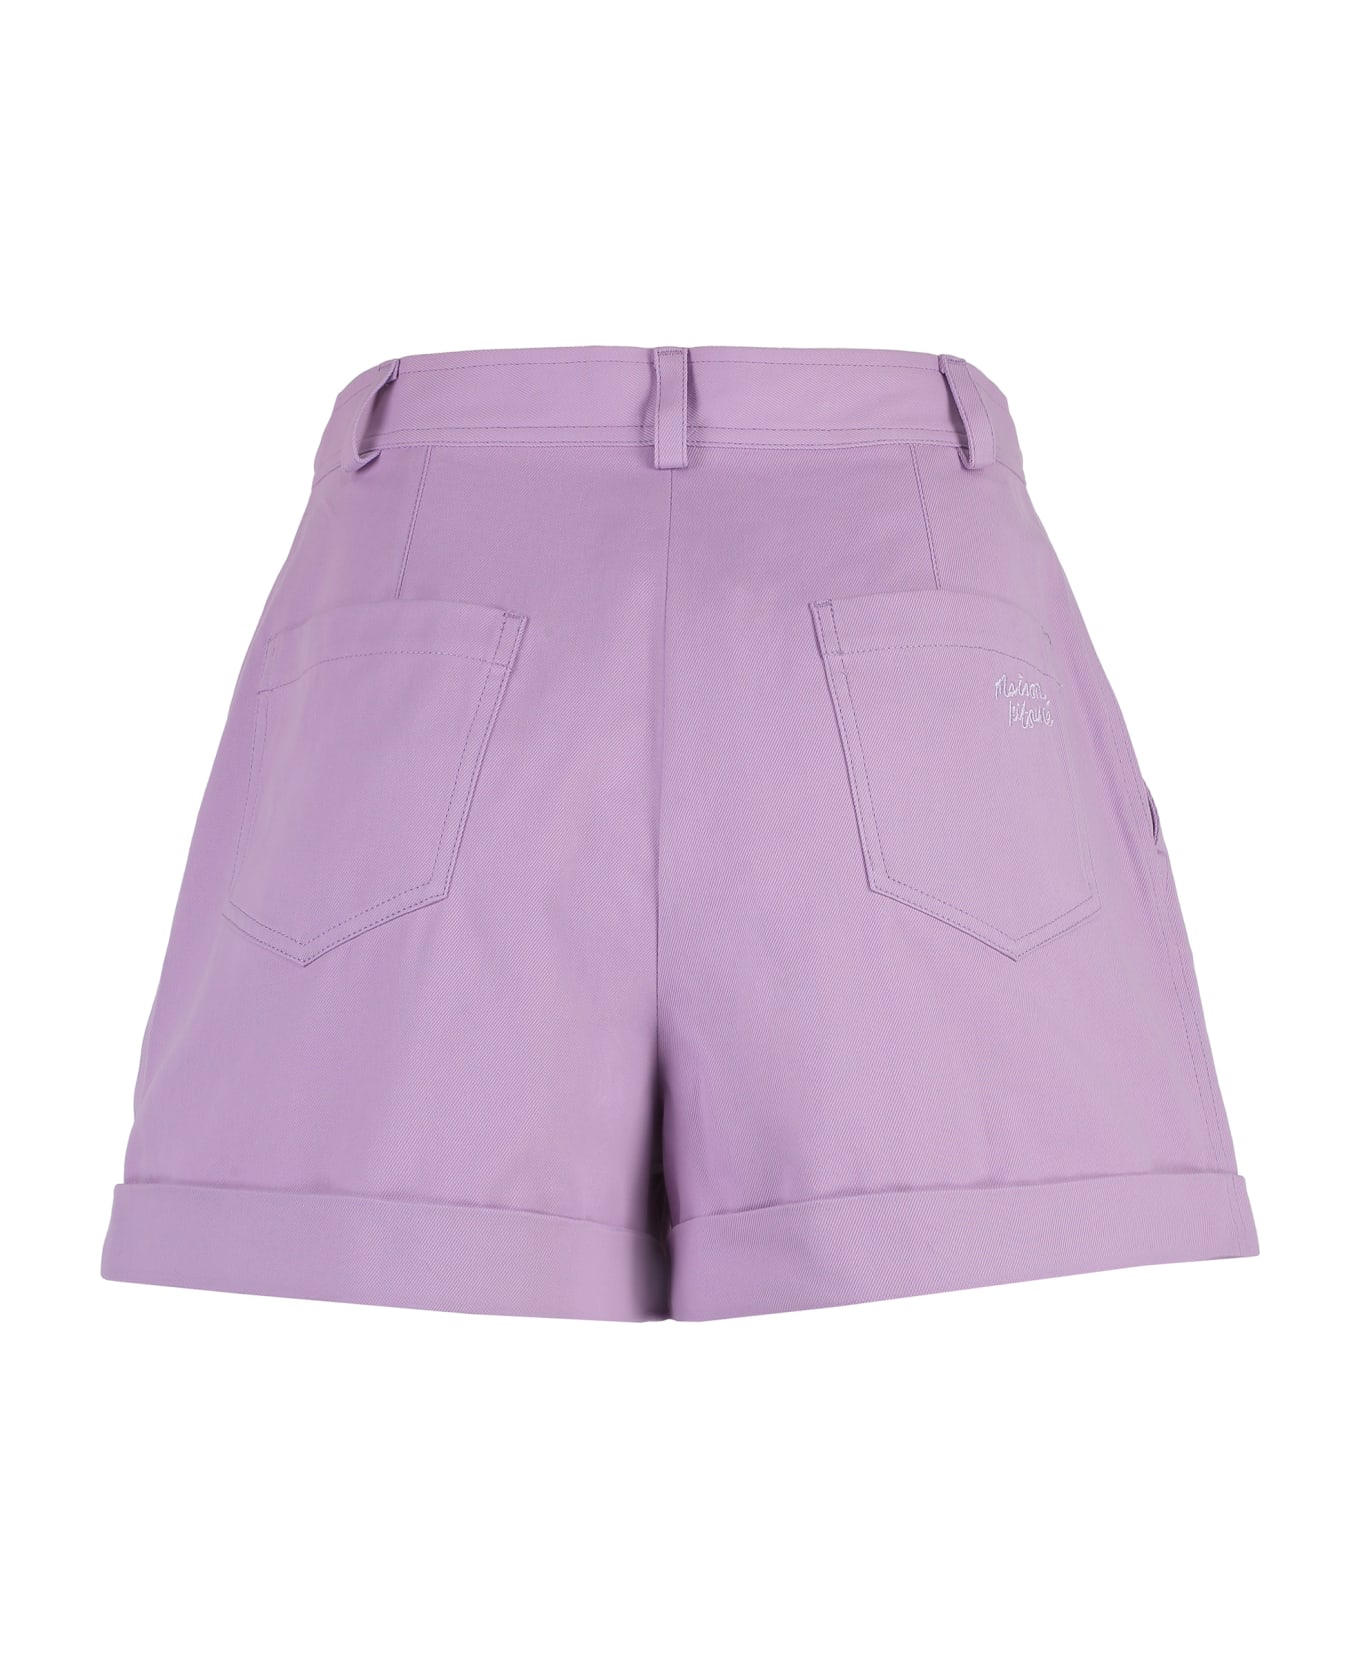 Maison Kitsuné Cotton Shorts - Lilac ショートパンツ